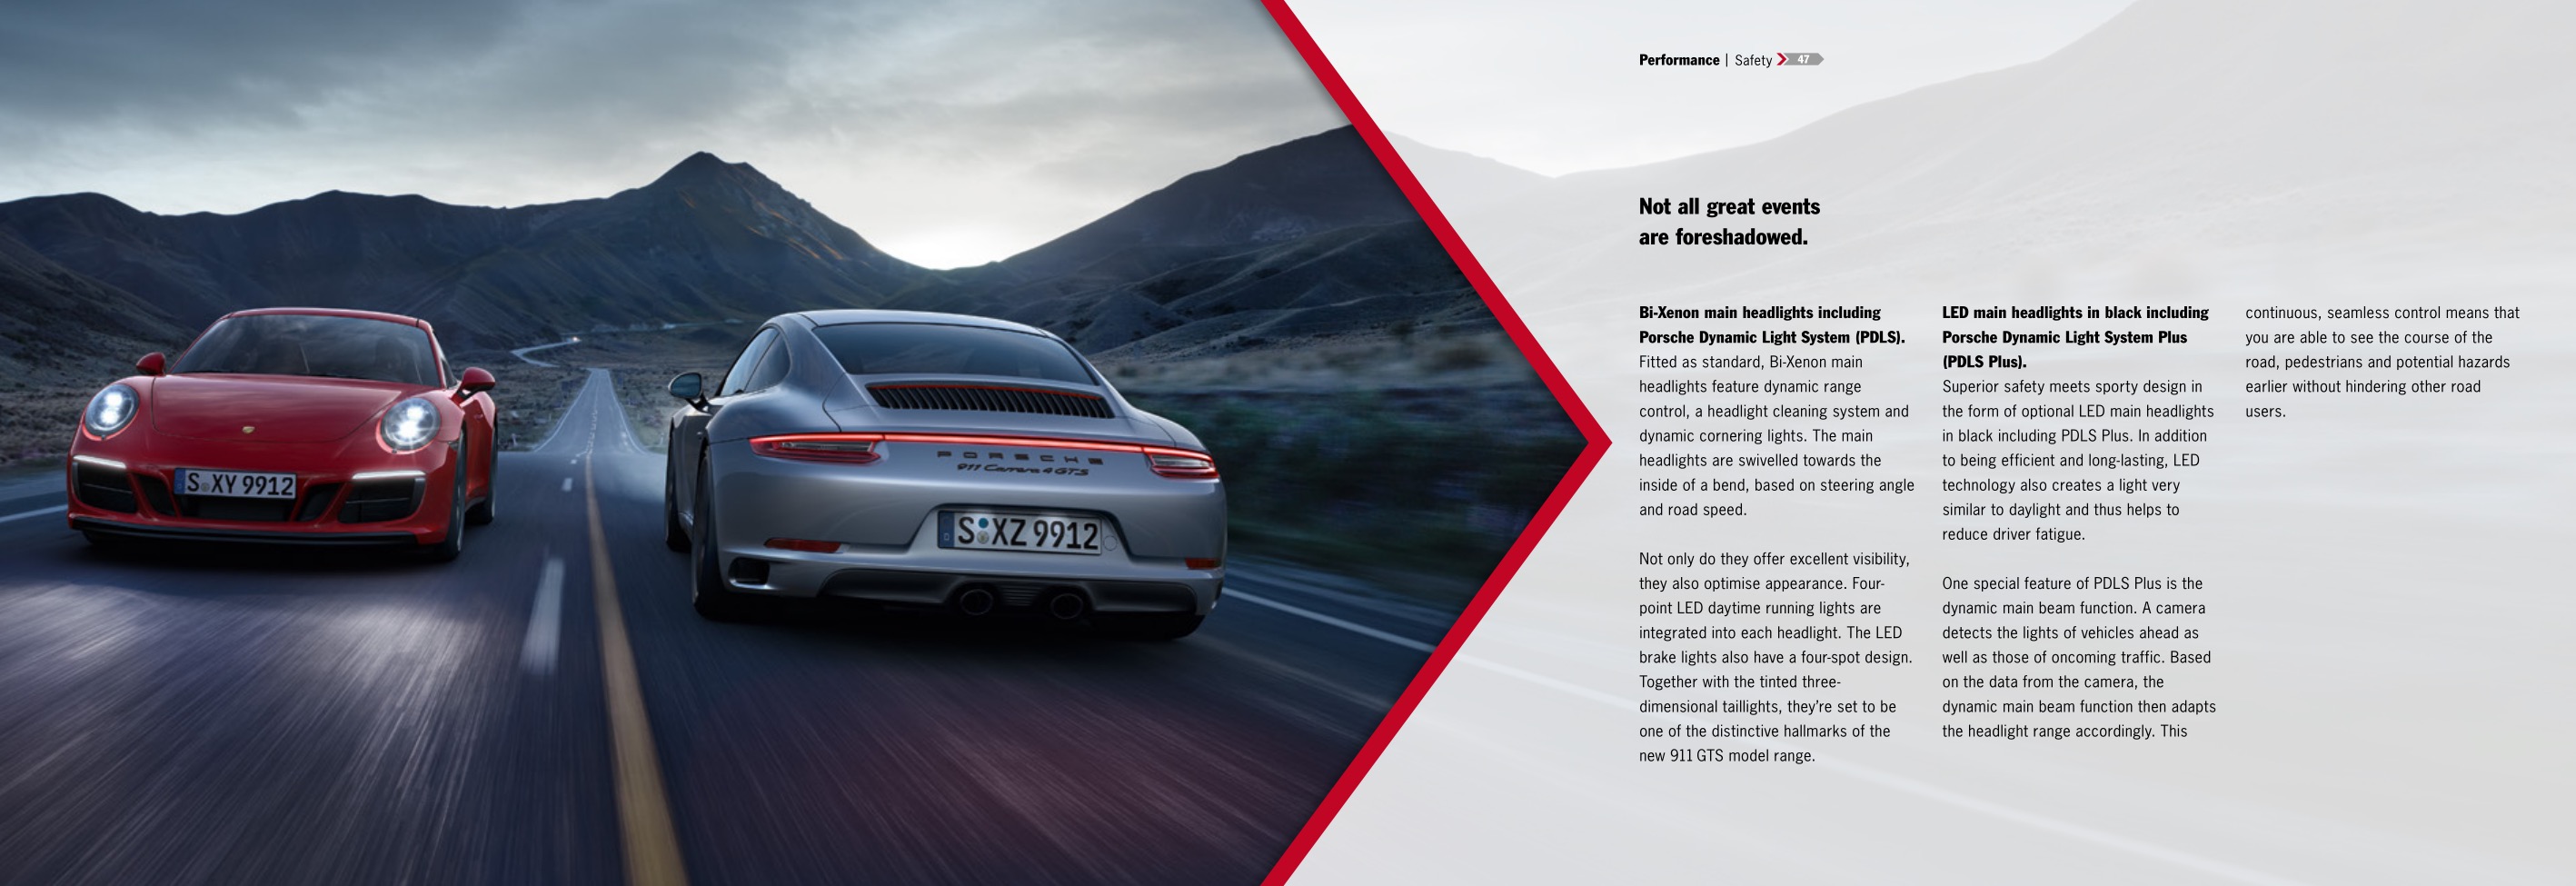 2017 Porsche 911 GTS Brochure Page 45